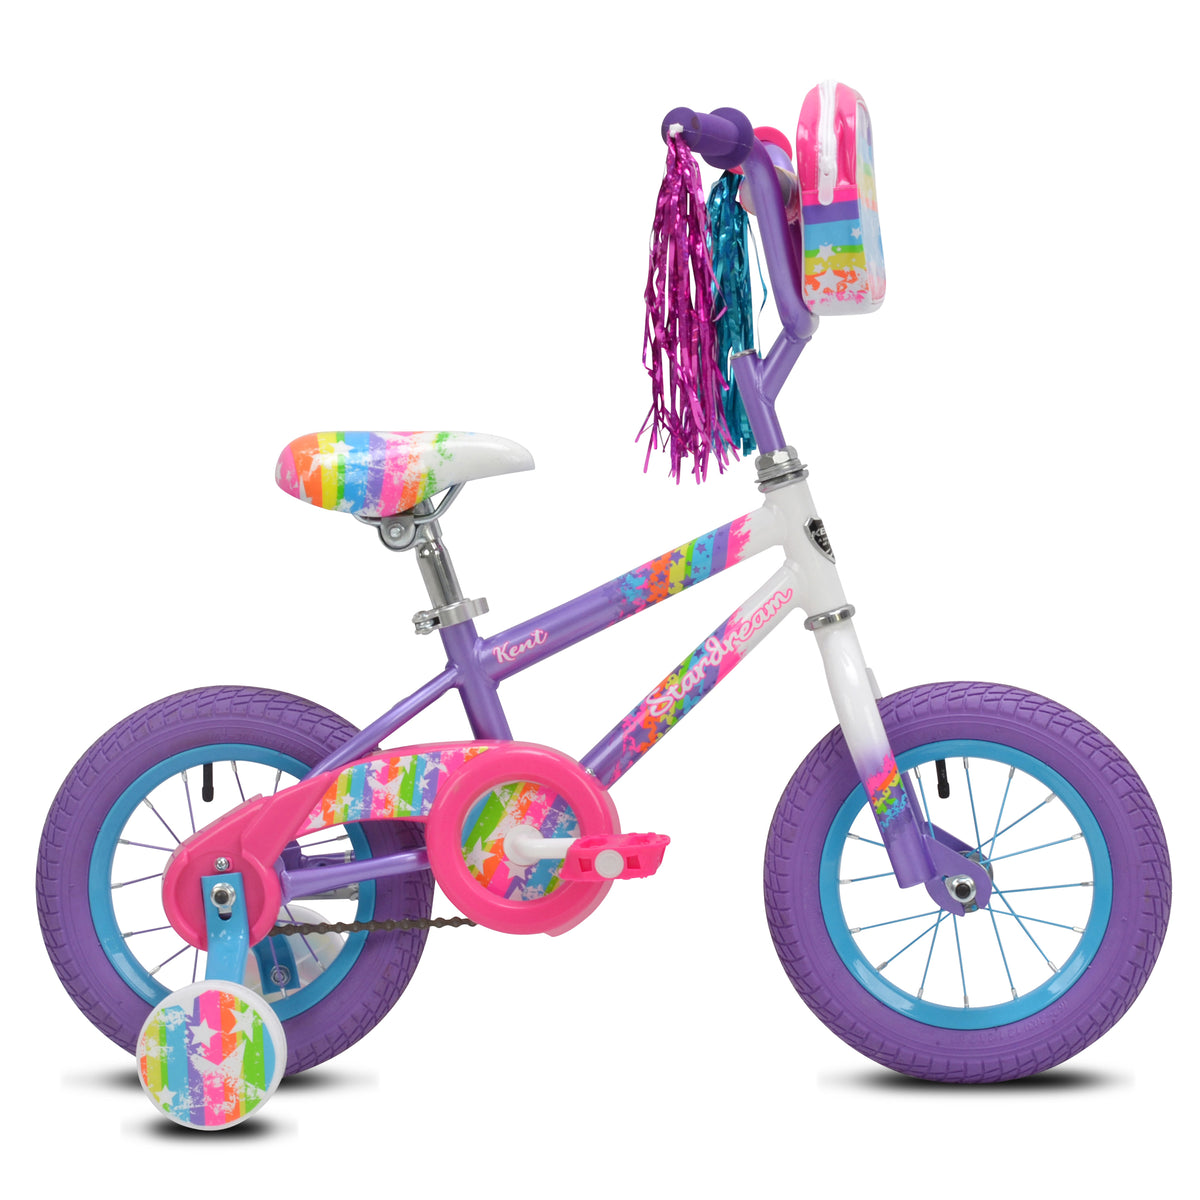 12" Kent Star Dream | Bike for Kids Ages 2-4